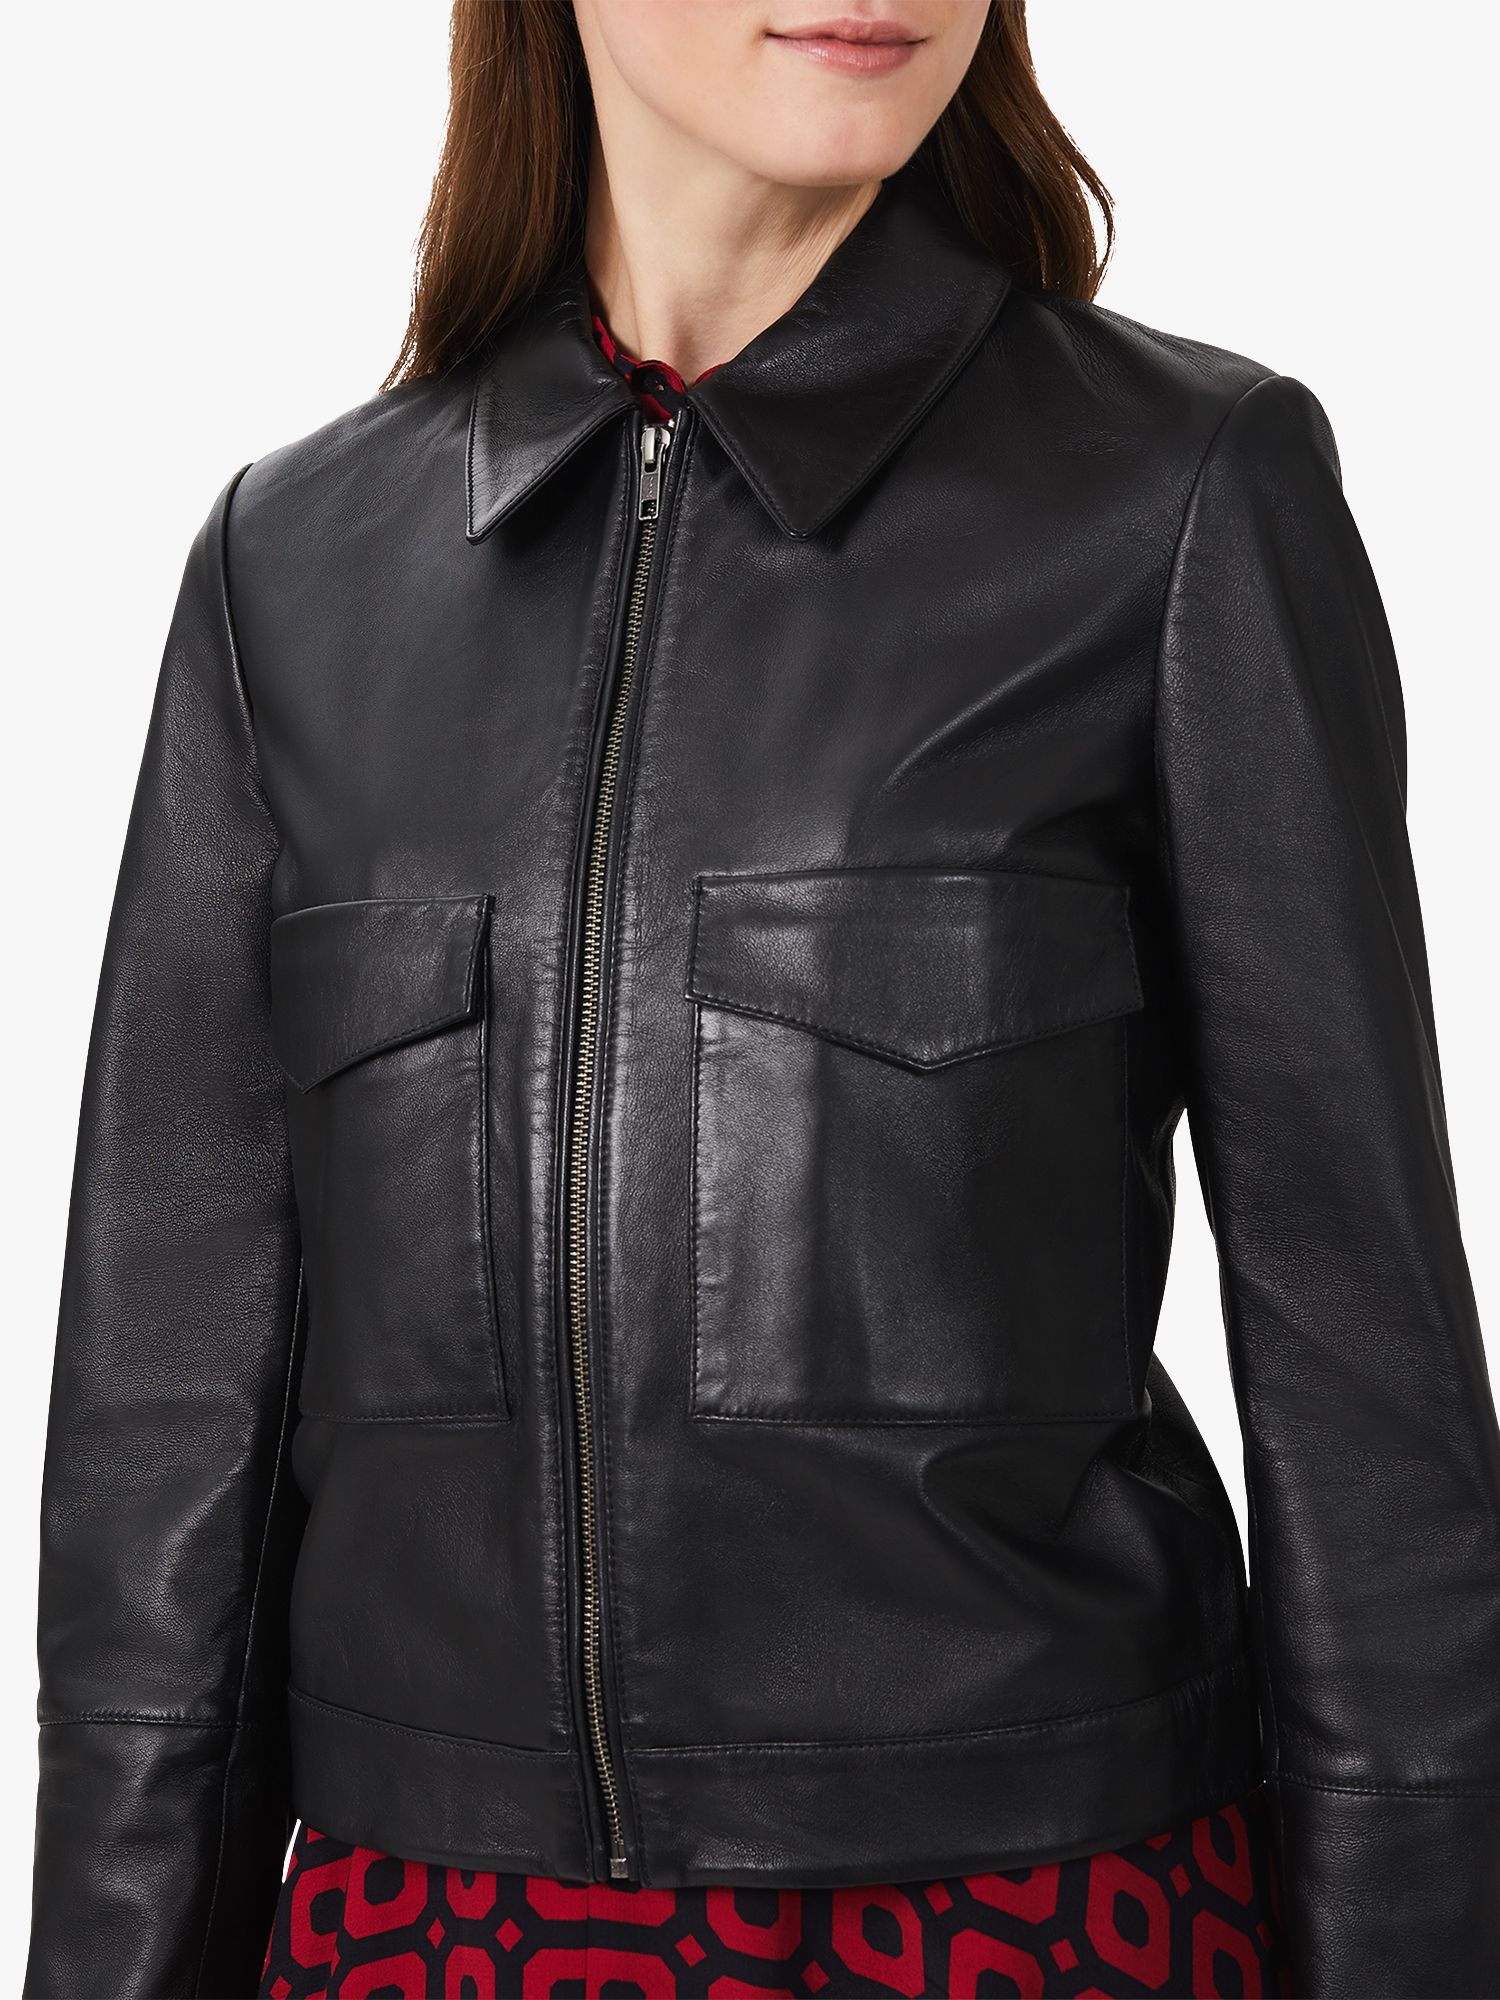 Hobbs Elise Leather Jacket, Black at John Lewis & Partners